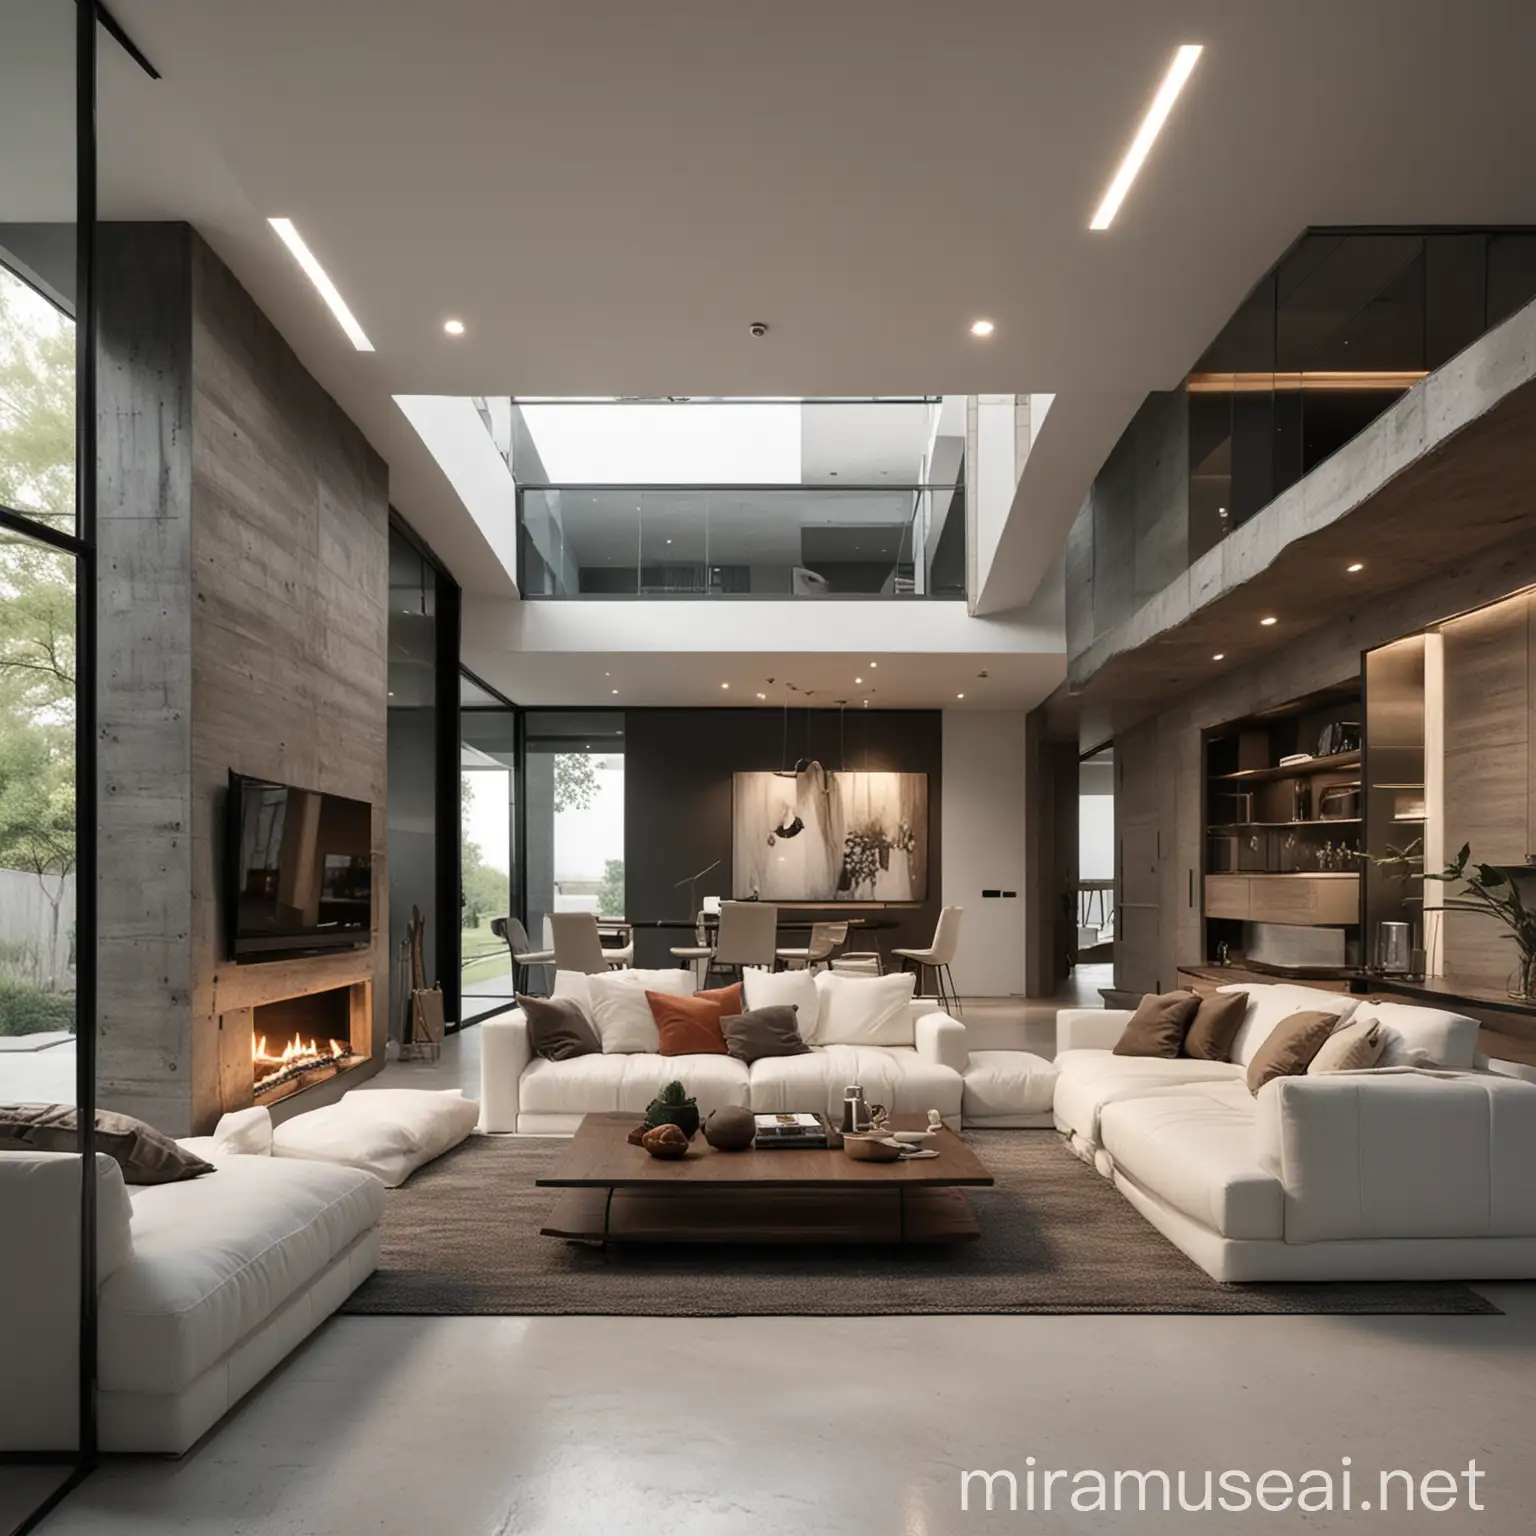 Contemporary Minimalist Interior Design with Futuristic Elements